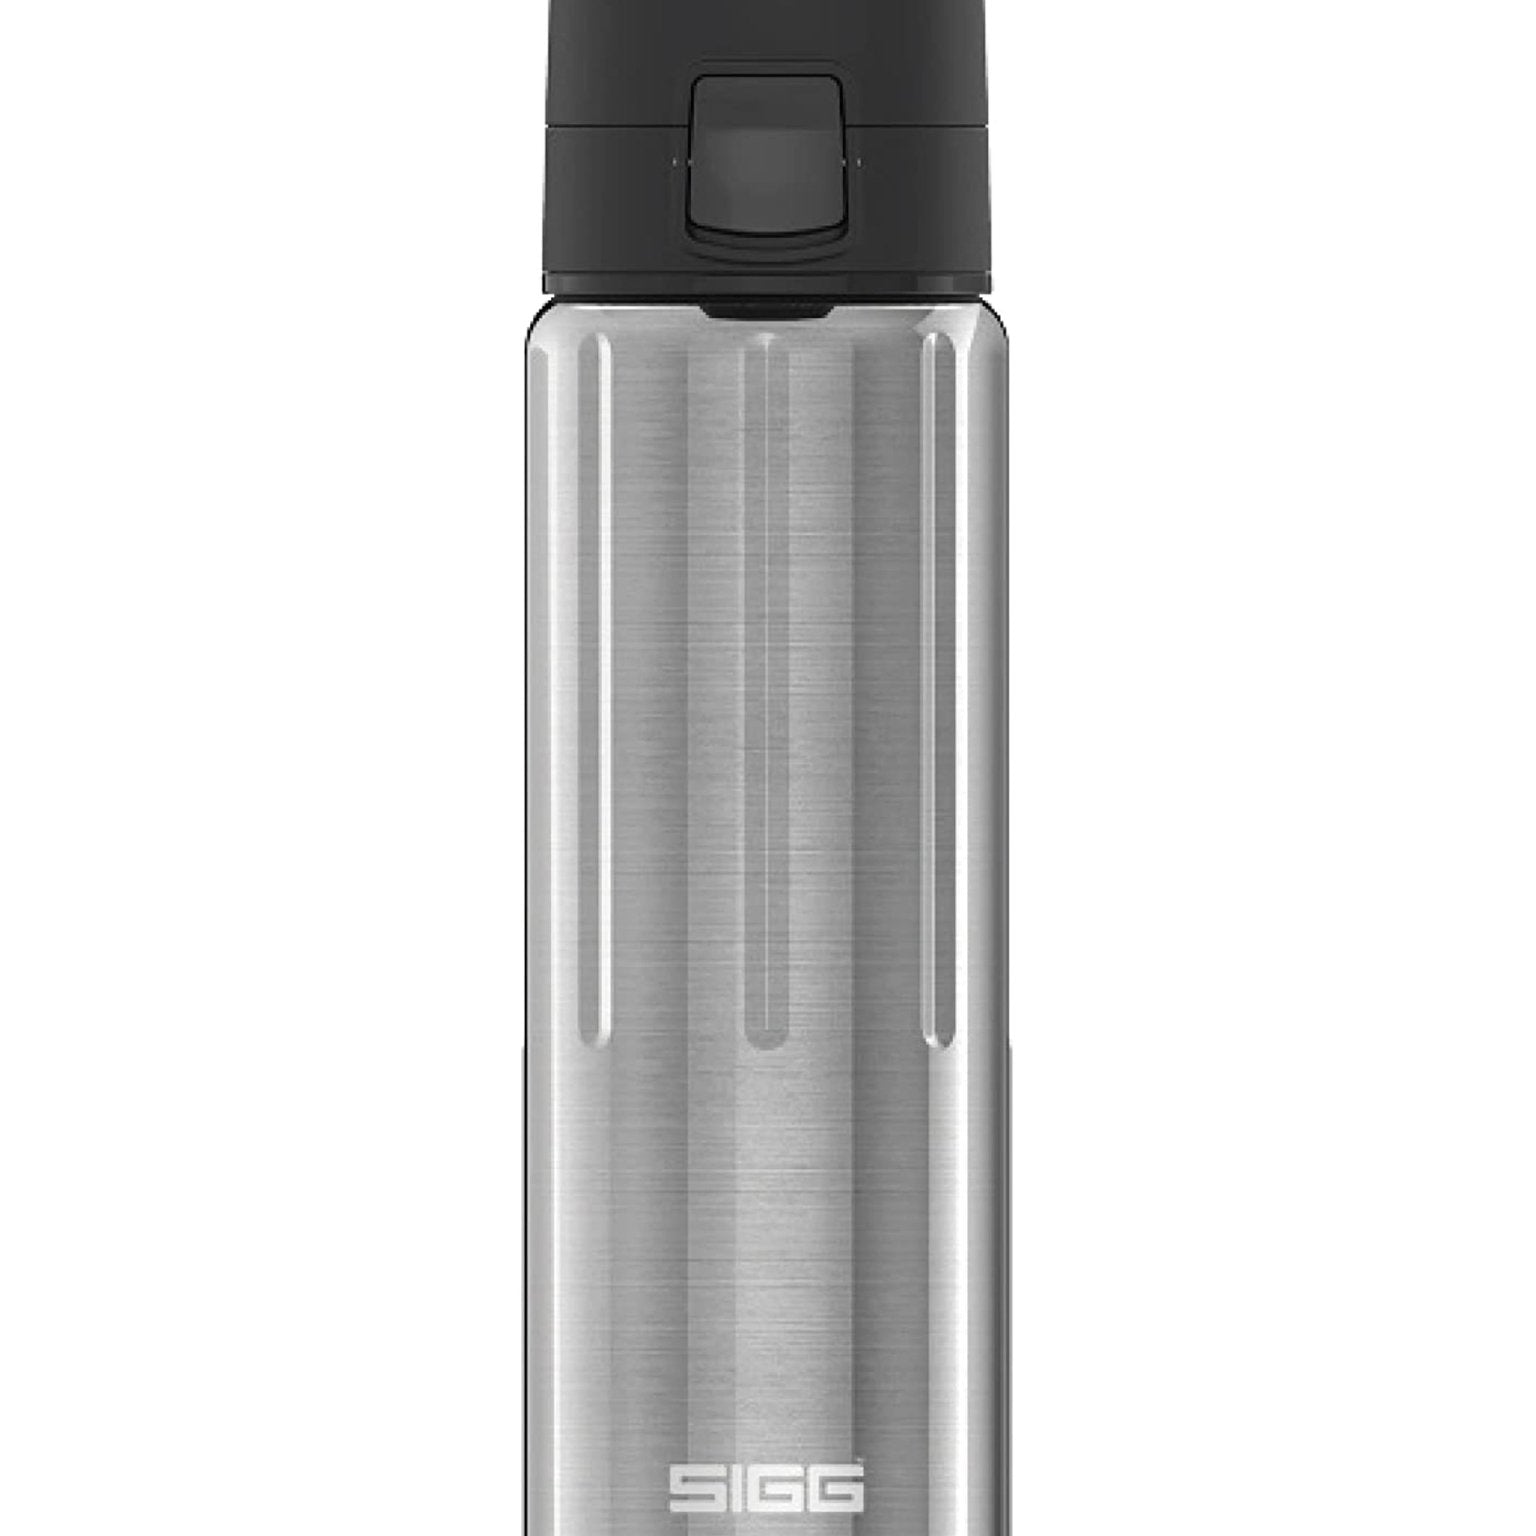 4elementsclothingSiggSIGG - Thermo Flask Gemstone ONE Vacuum Thermal flask (0.5L)Water Bottles8735.20